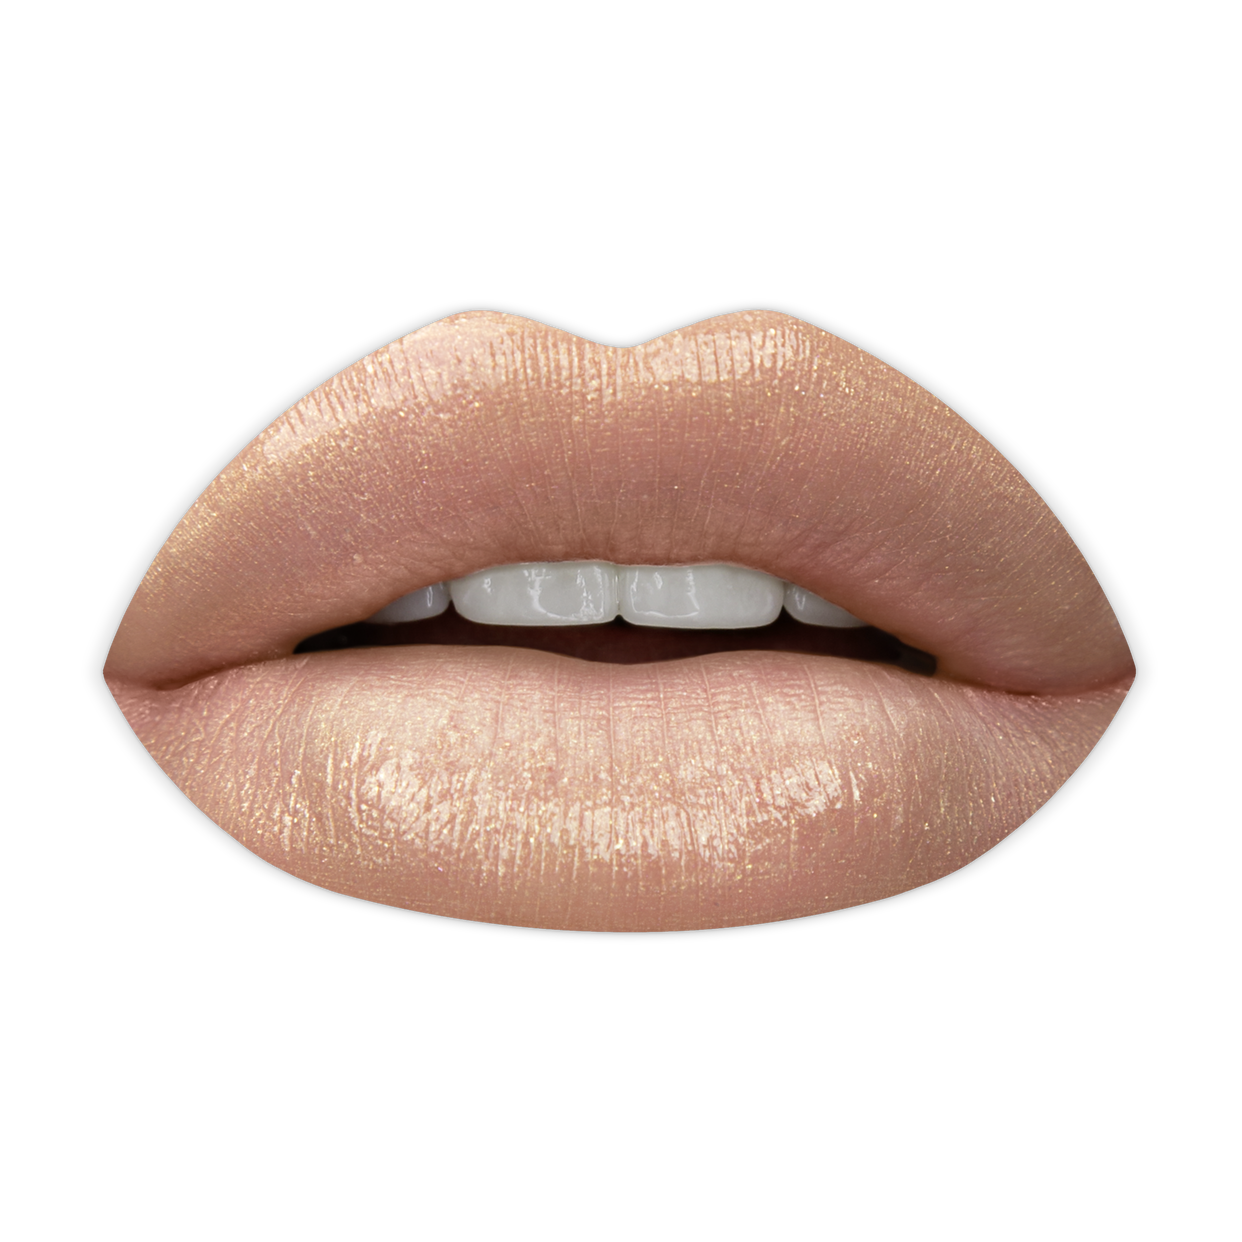 Huda Beauty - Lip Strobe Metallic Lip Gloss | 4 mL